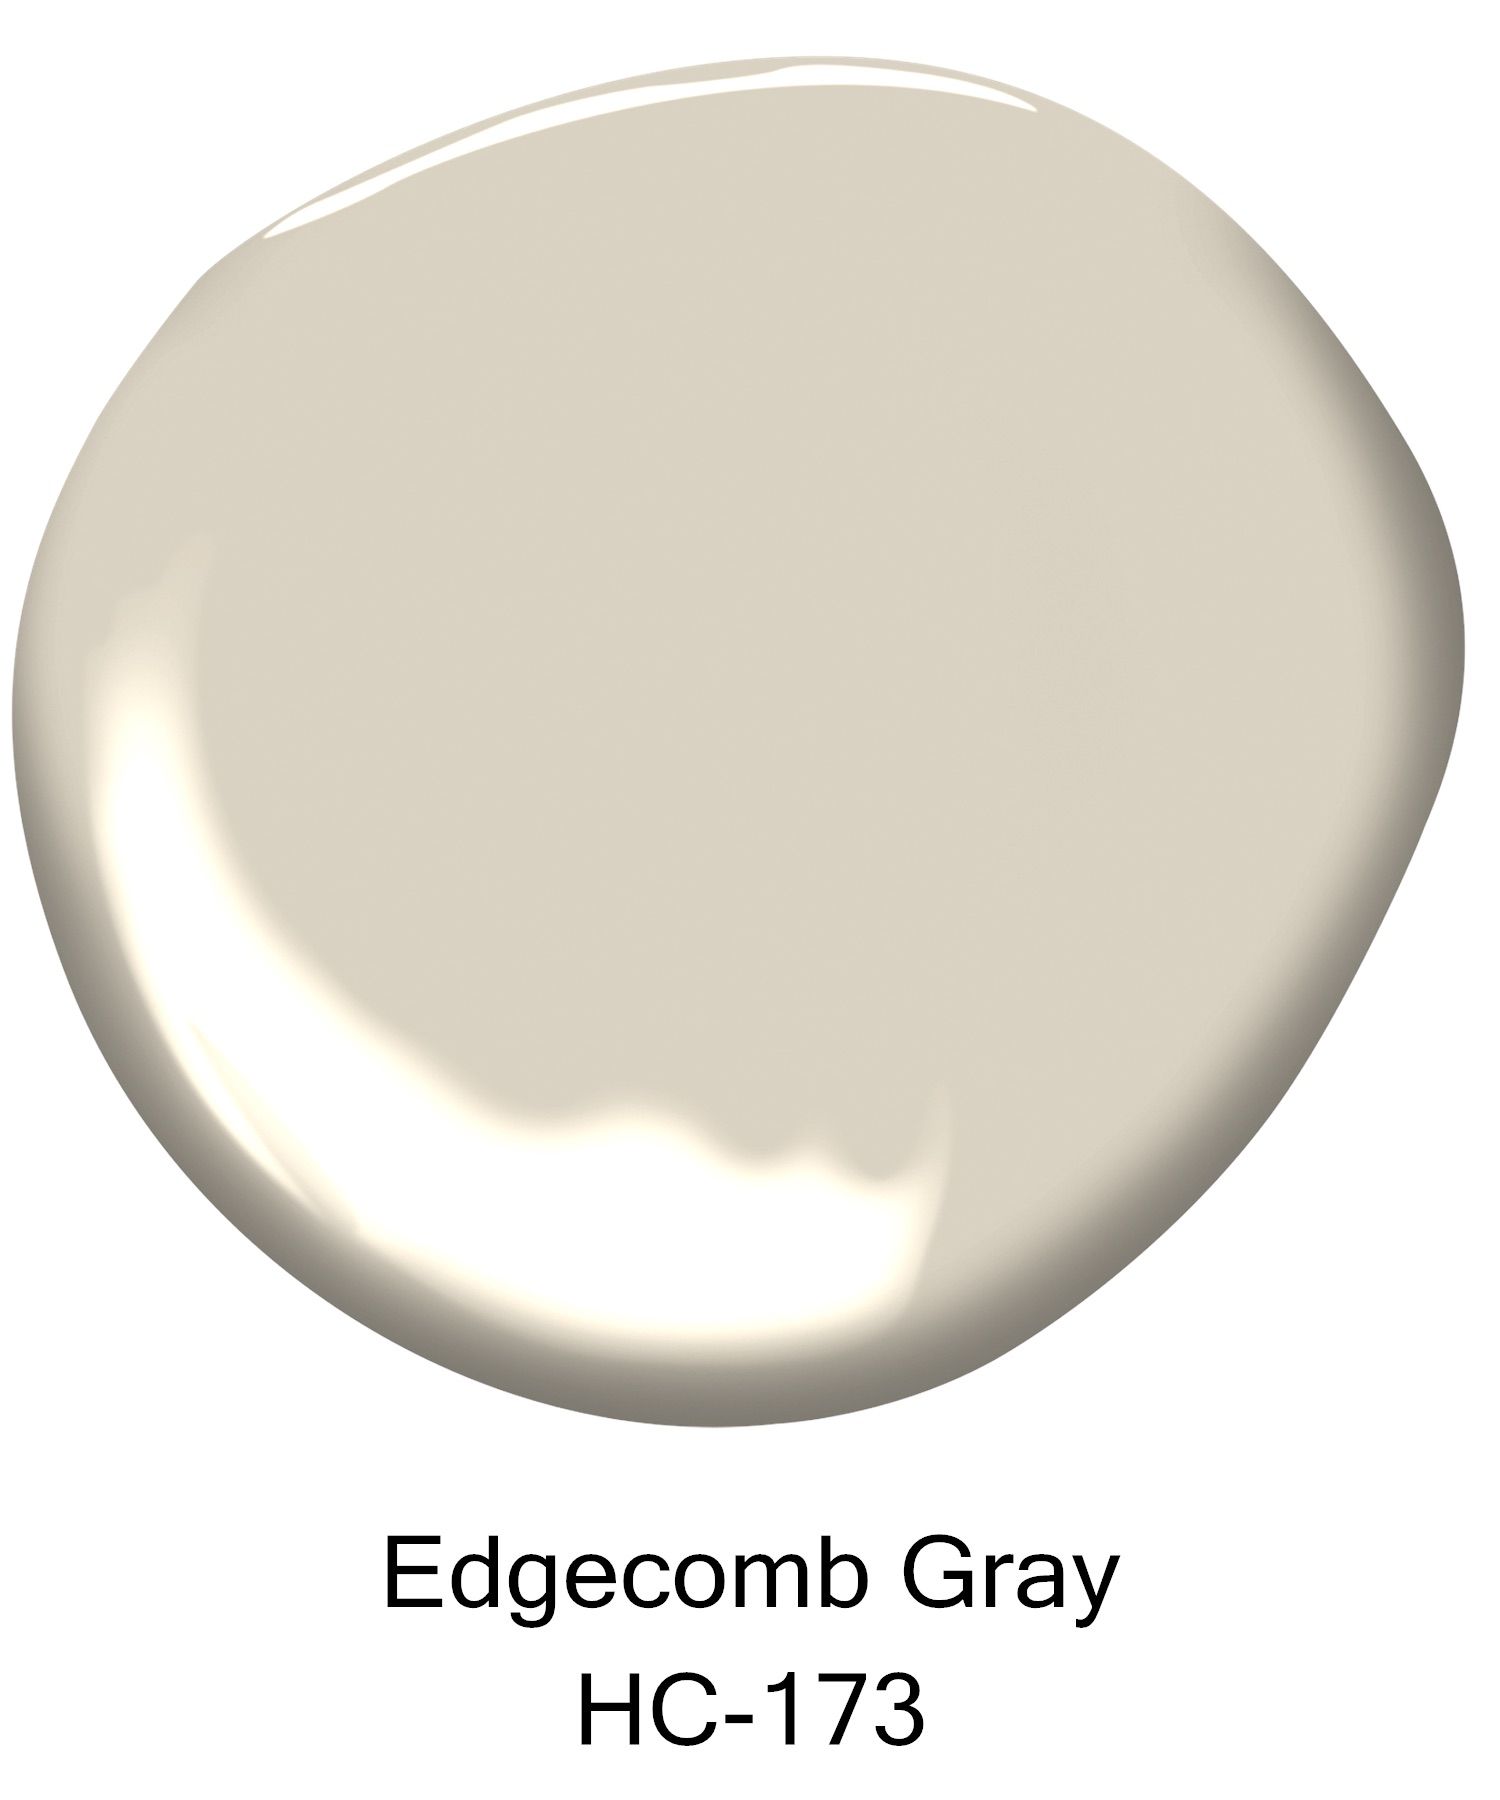 benjamin moore edgecomb gray